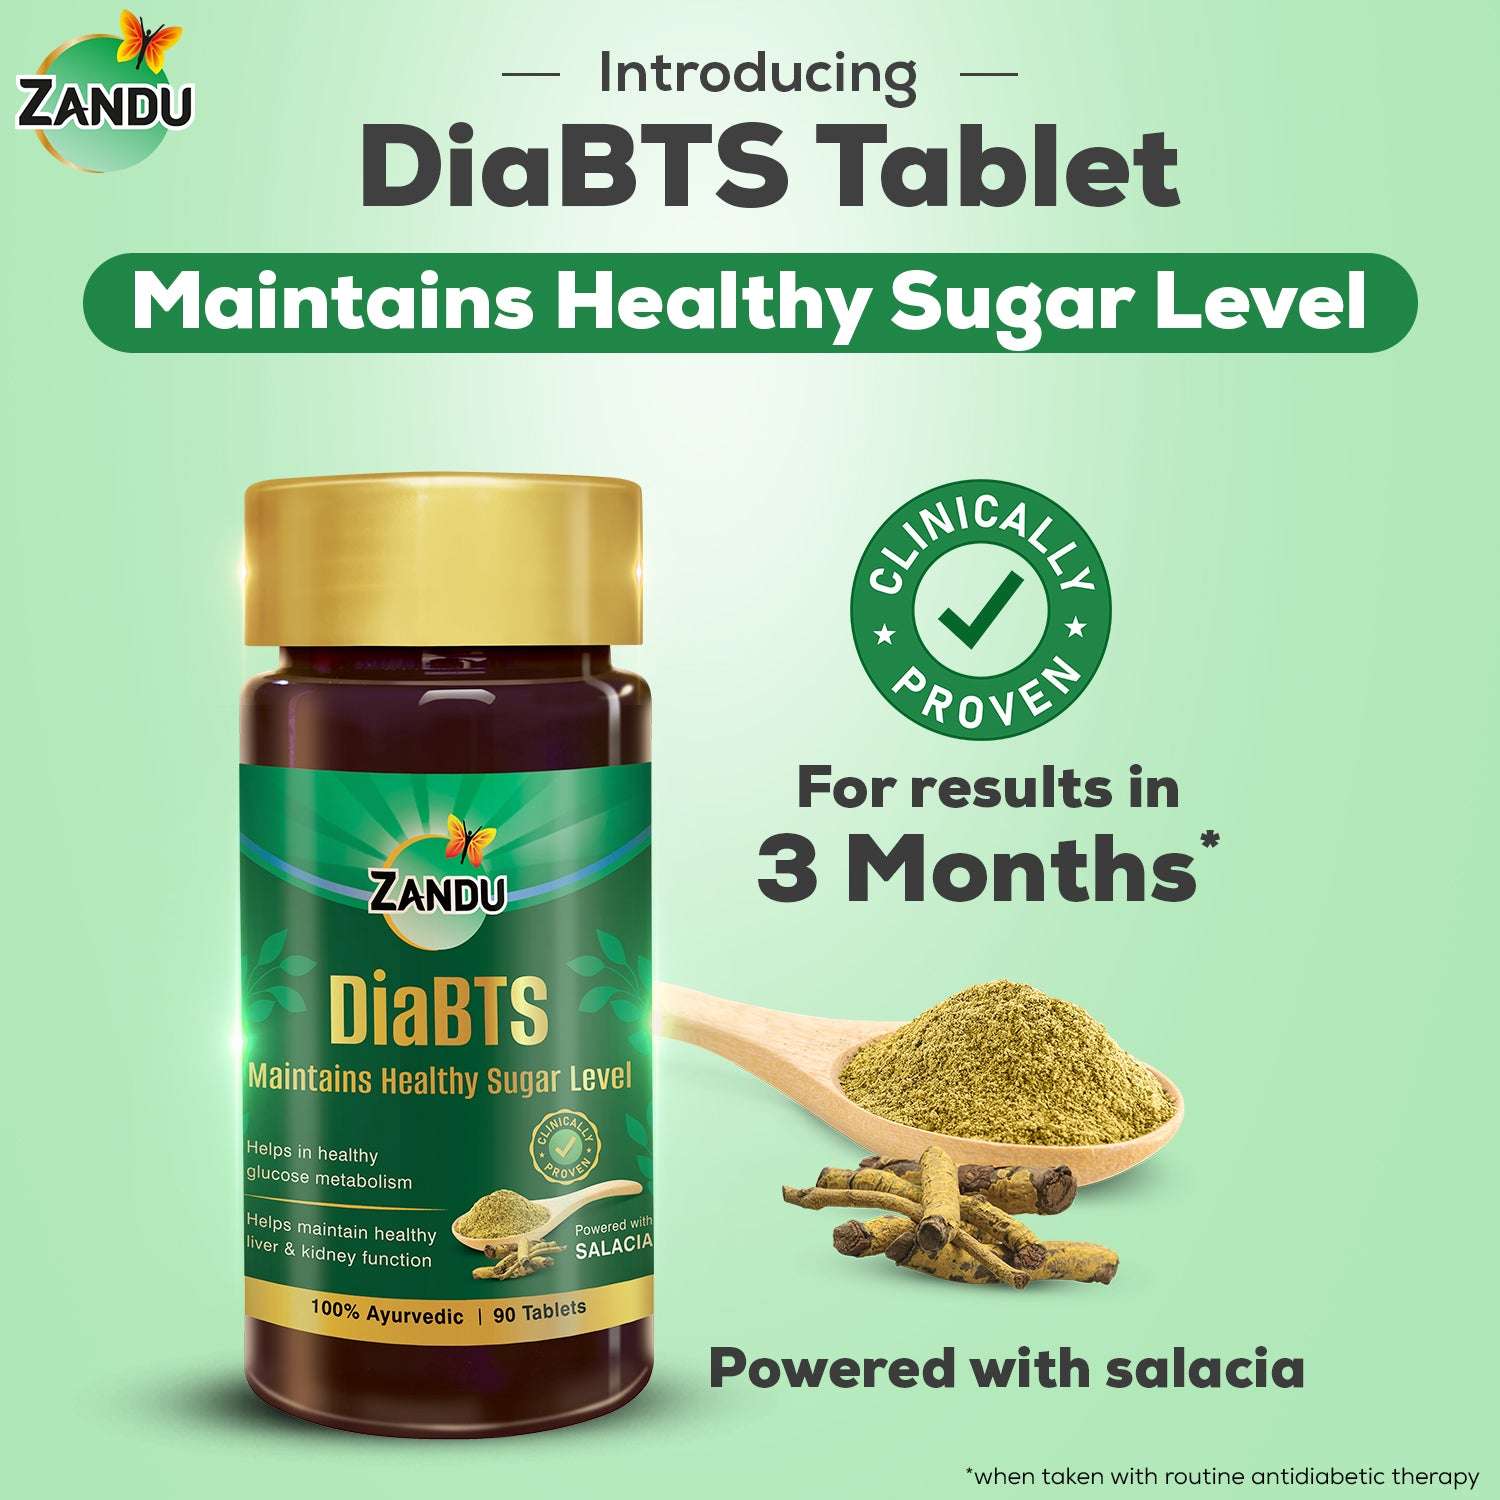 DiaBTS Tablets